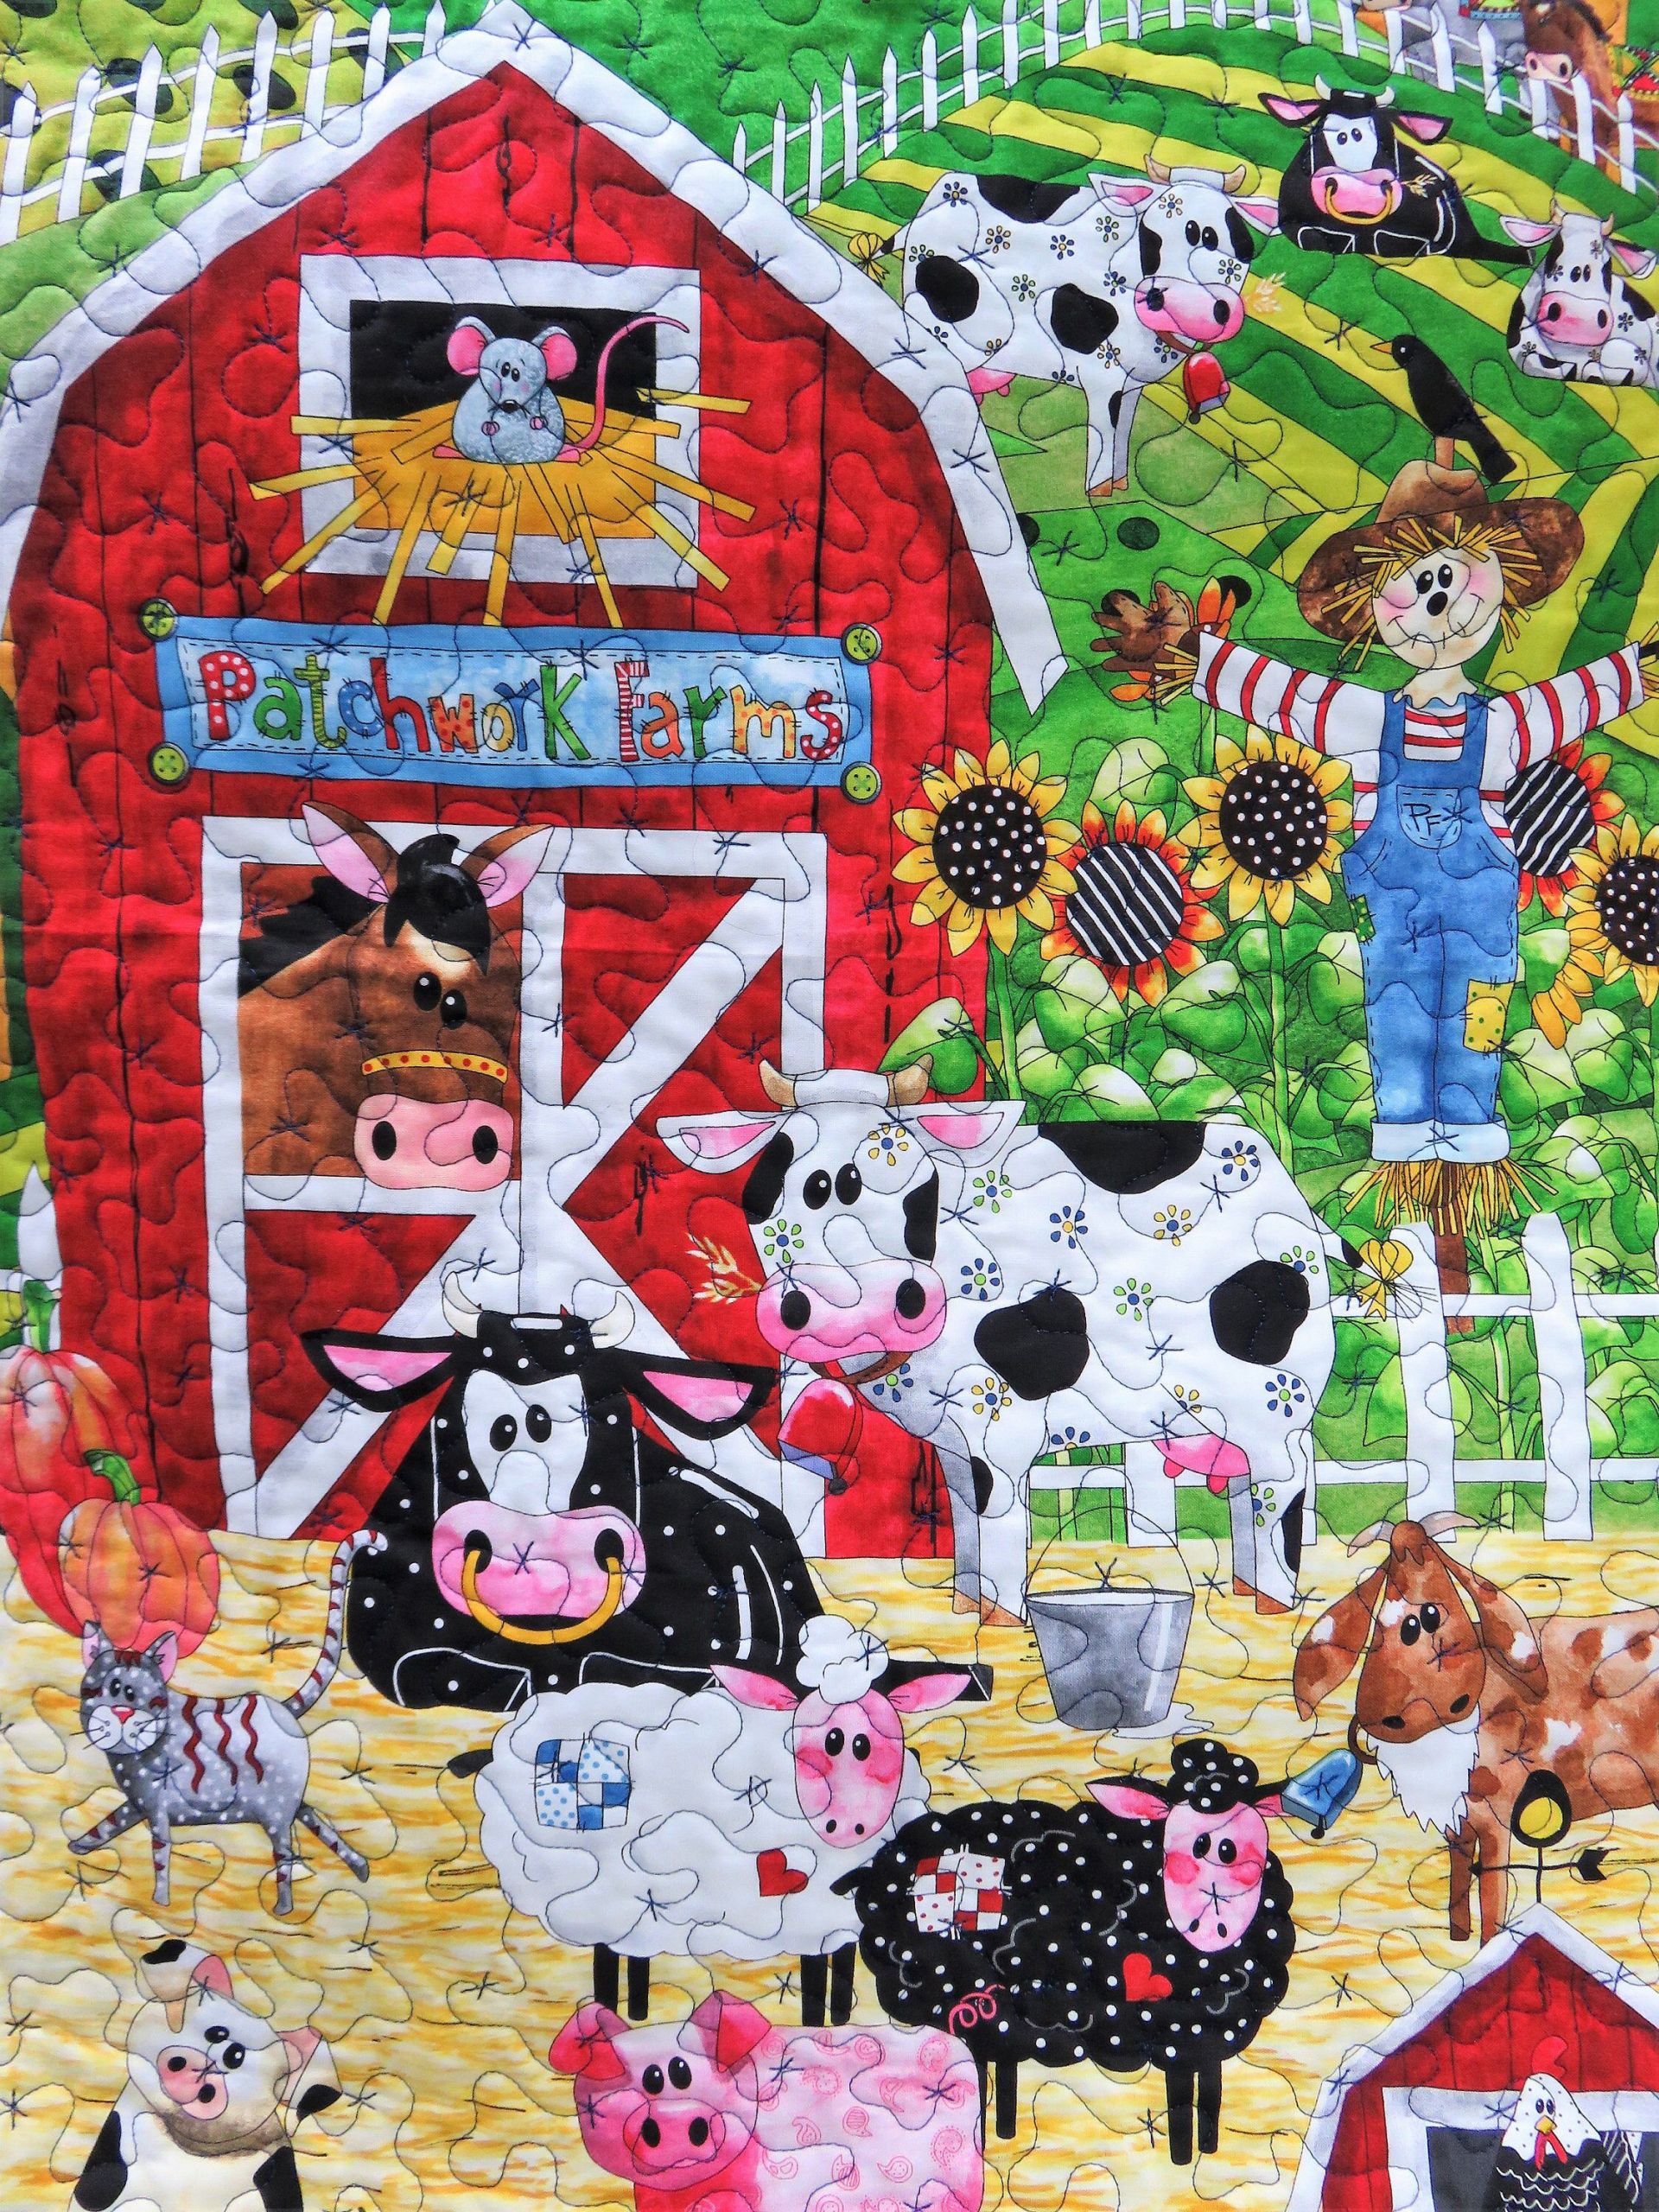 Farm Animals Crafts for Kids Pig